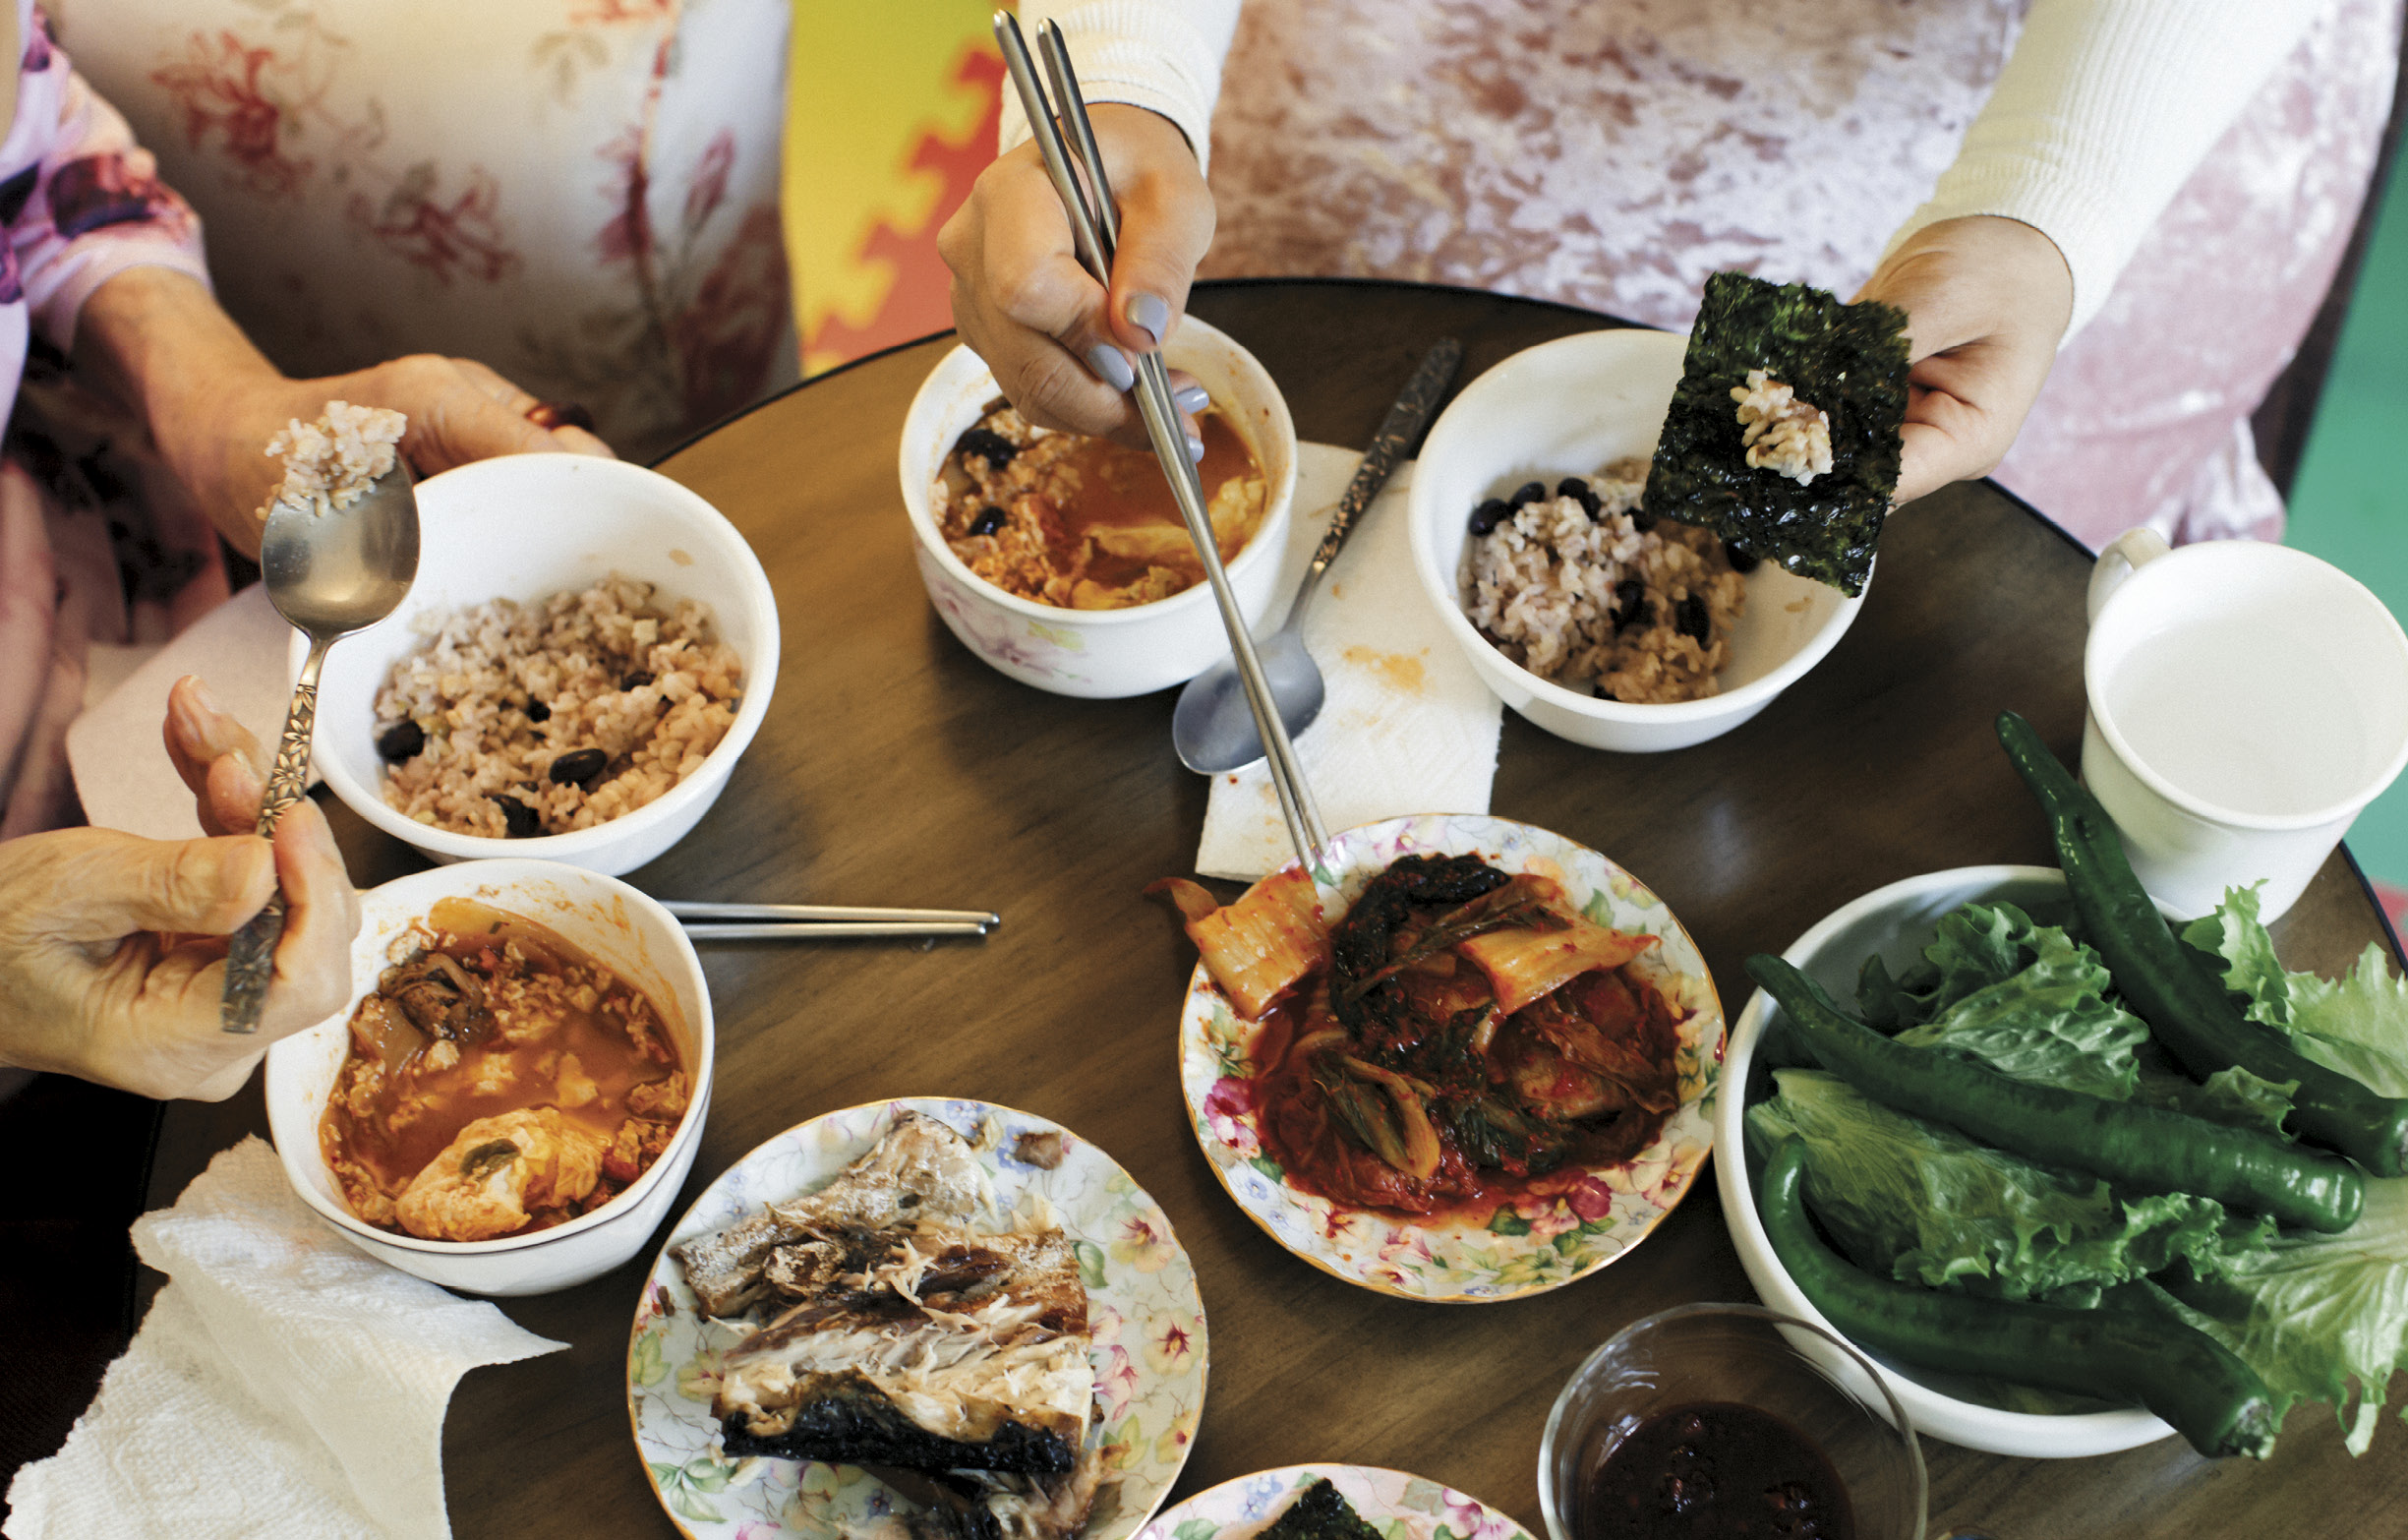 Radish Kimchi and other Korean dishes.